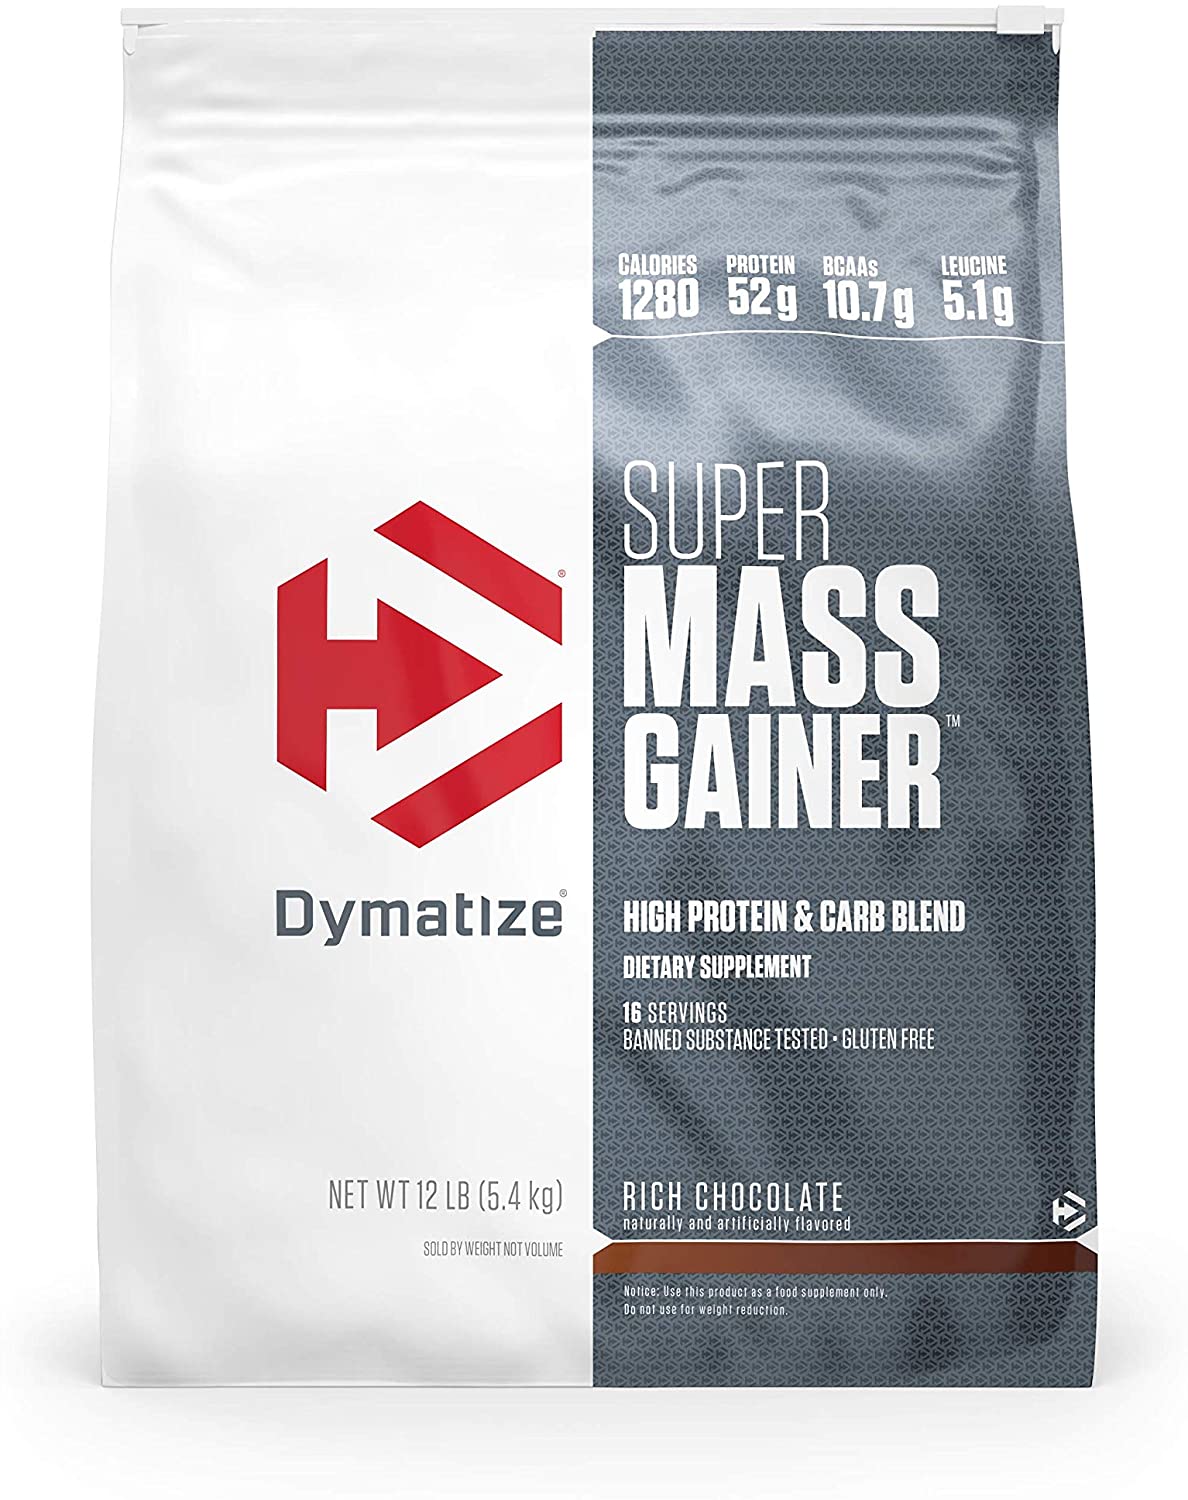 Dymatize SUPER Mass Gainer 12Lb, 16 servings, Rich Chocolate, SNS Health, Sports Nutrition